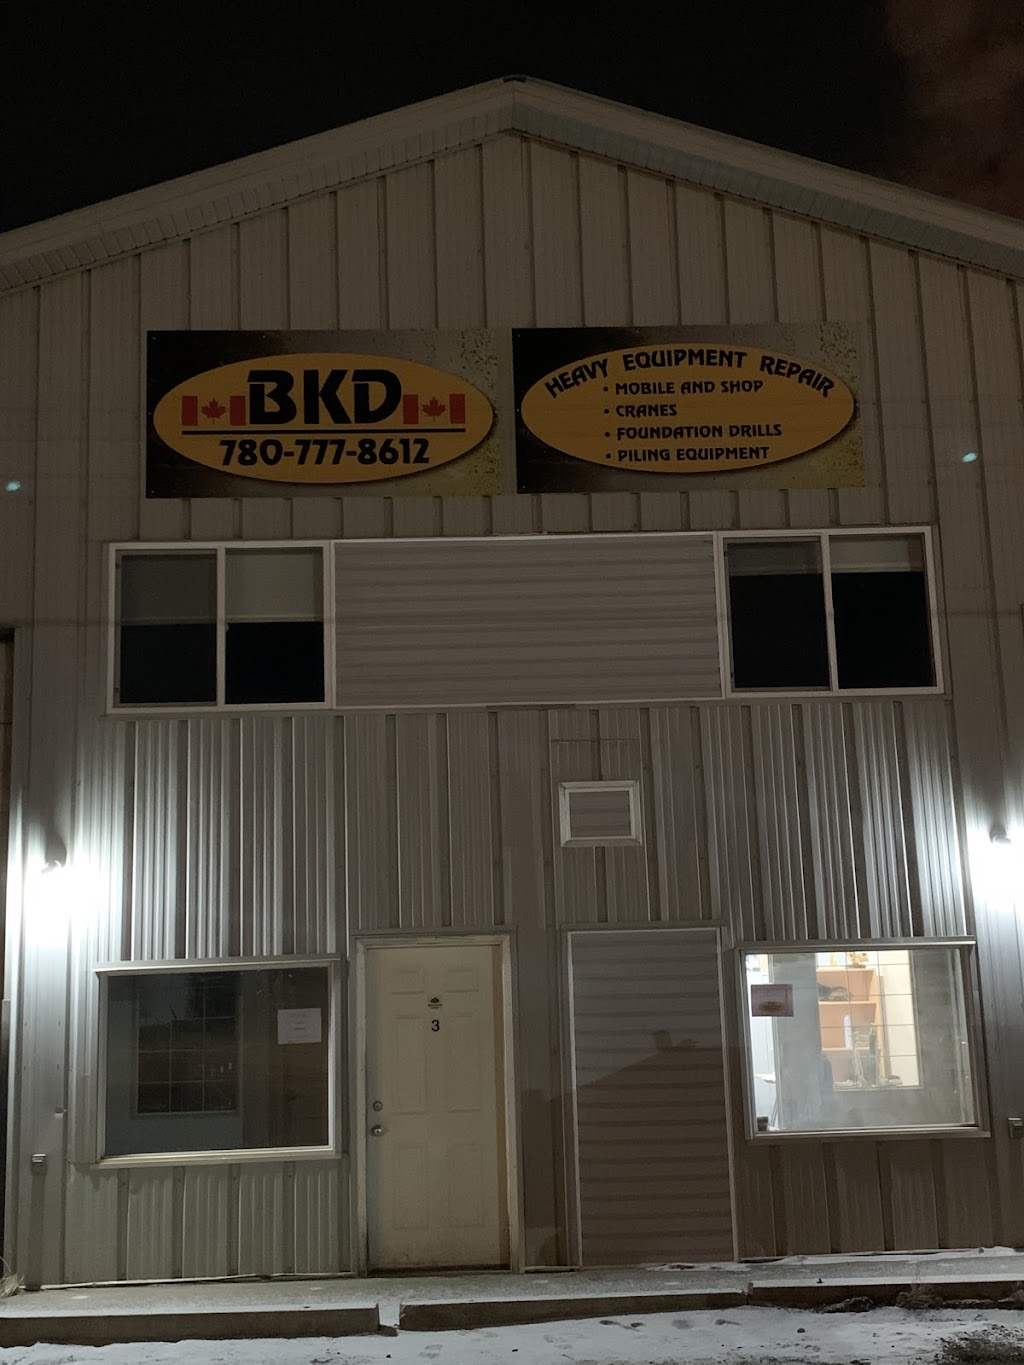 BKD Mechanical | car repair | 3 Granite Dr, Stony Plain, AB T7Z 1V8, Canada | 7807778612 OR +1 780-777-8612